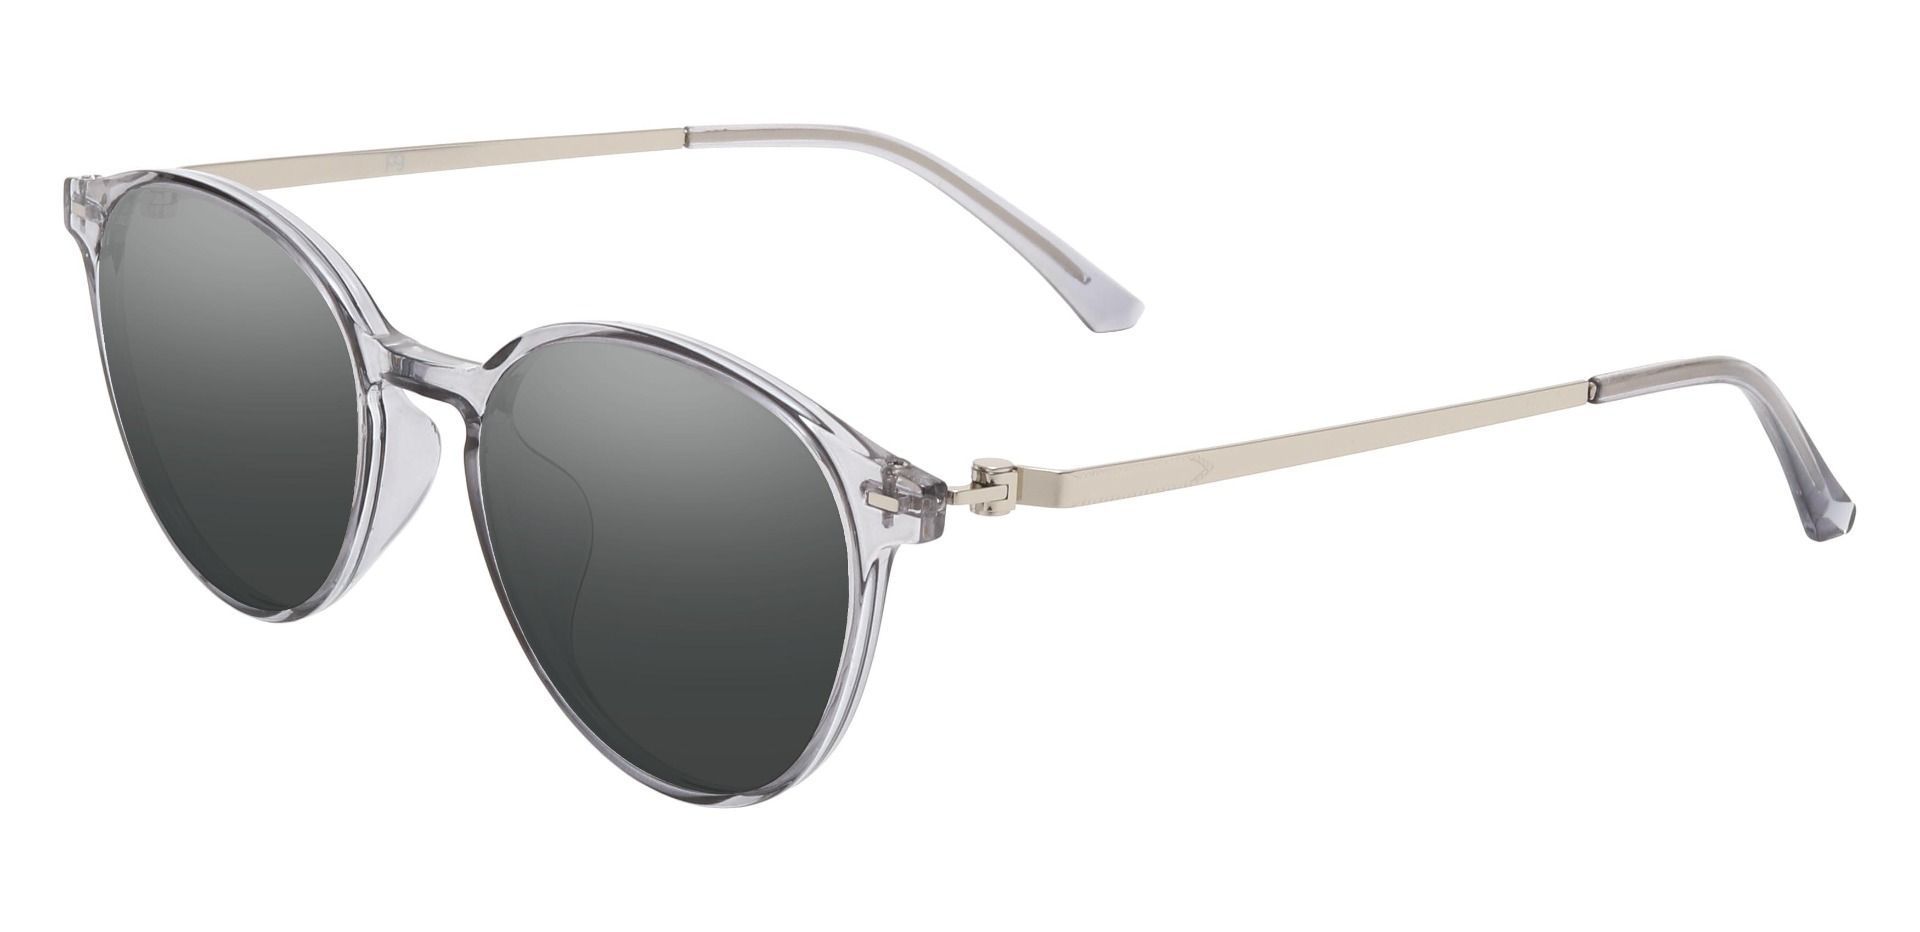 Springer Round Non-Rx Sunglasses - Gray Frame With Gray Lenses